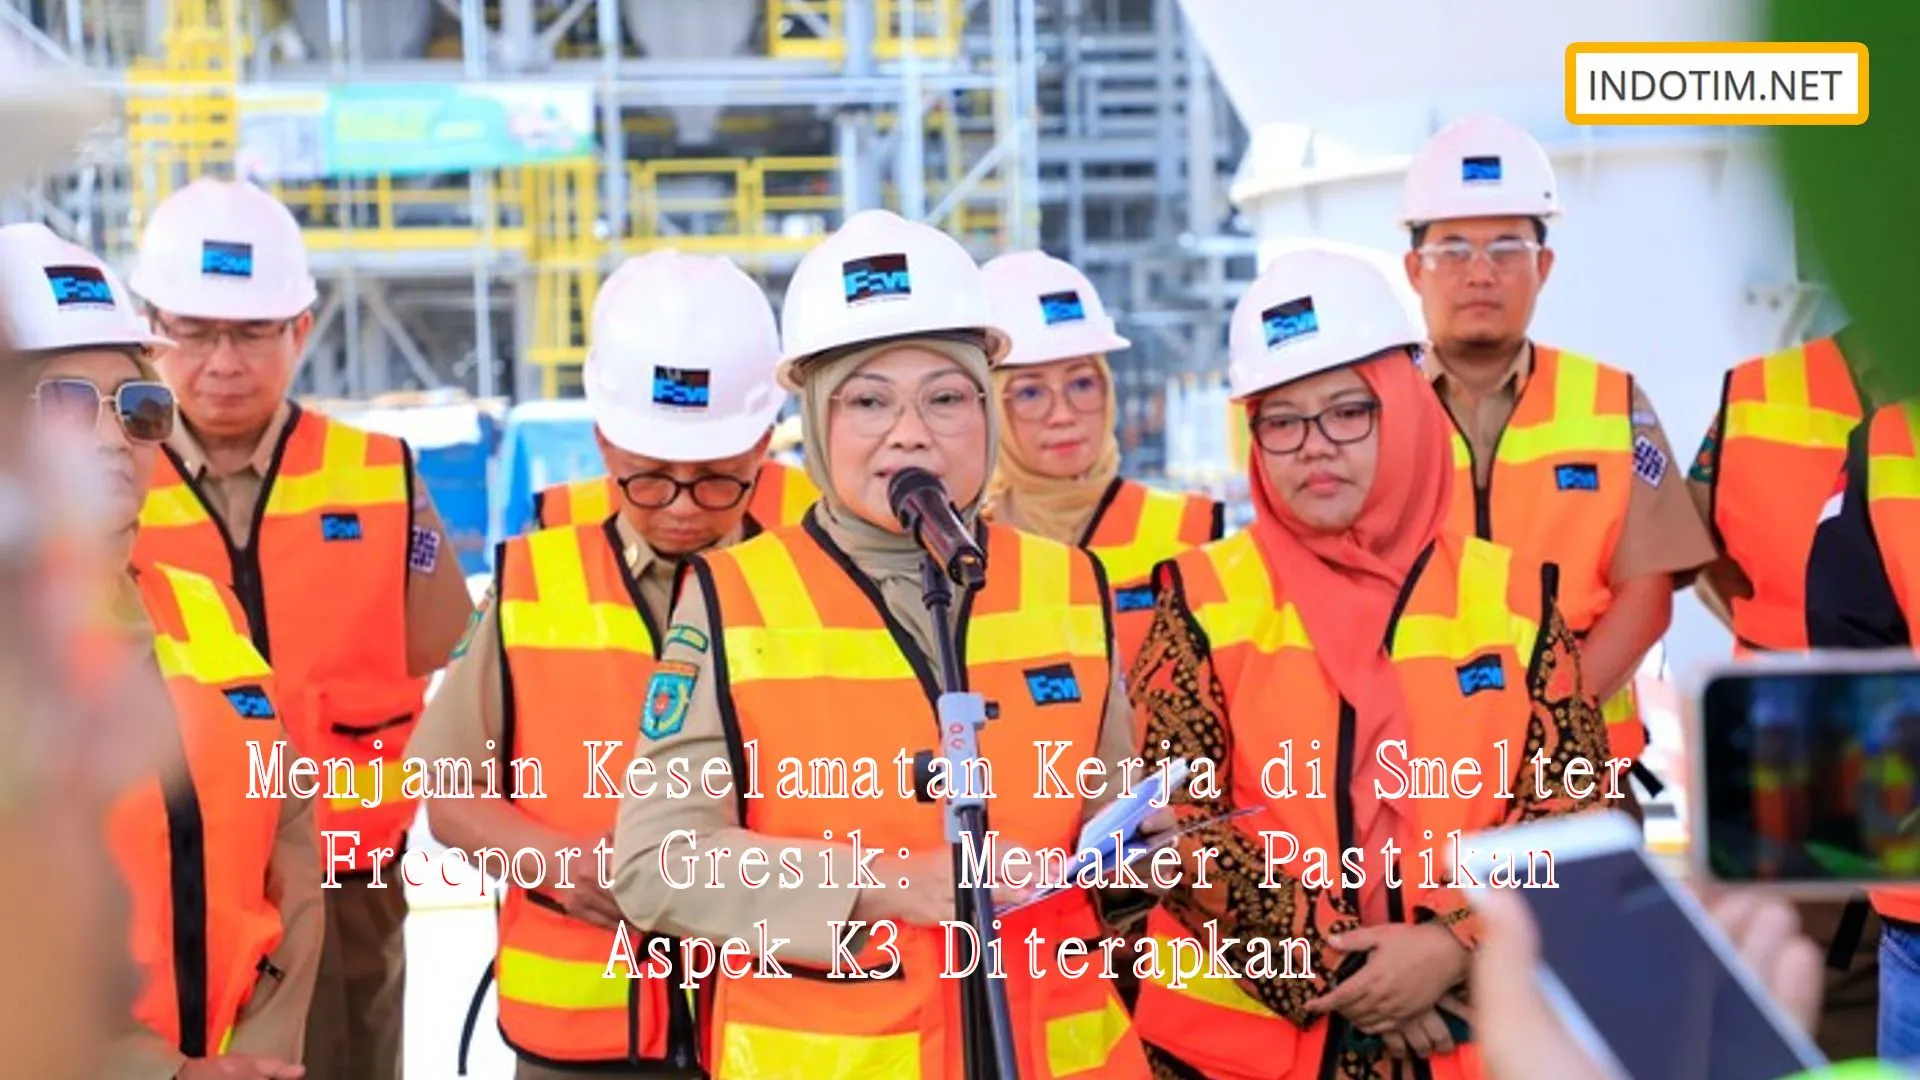 Menjamin Keselamatan Kerja di Smelter Freeport Gresik: Menaker Pastikan Aspek K3 Diterapkan